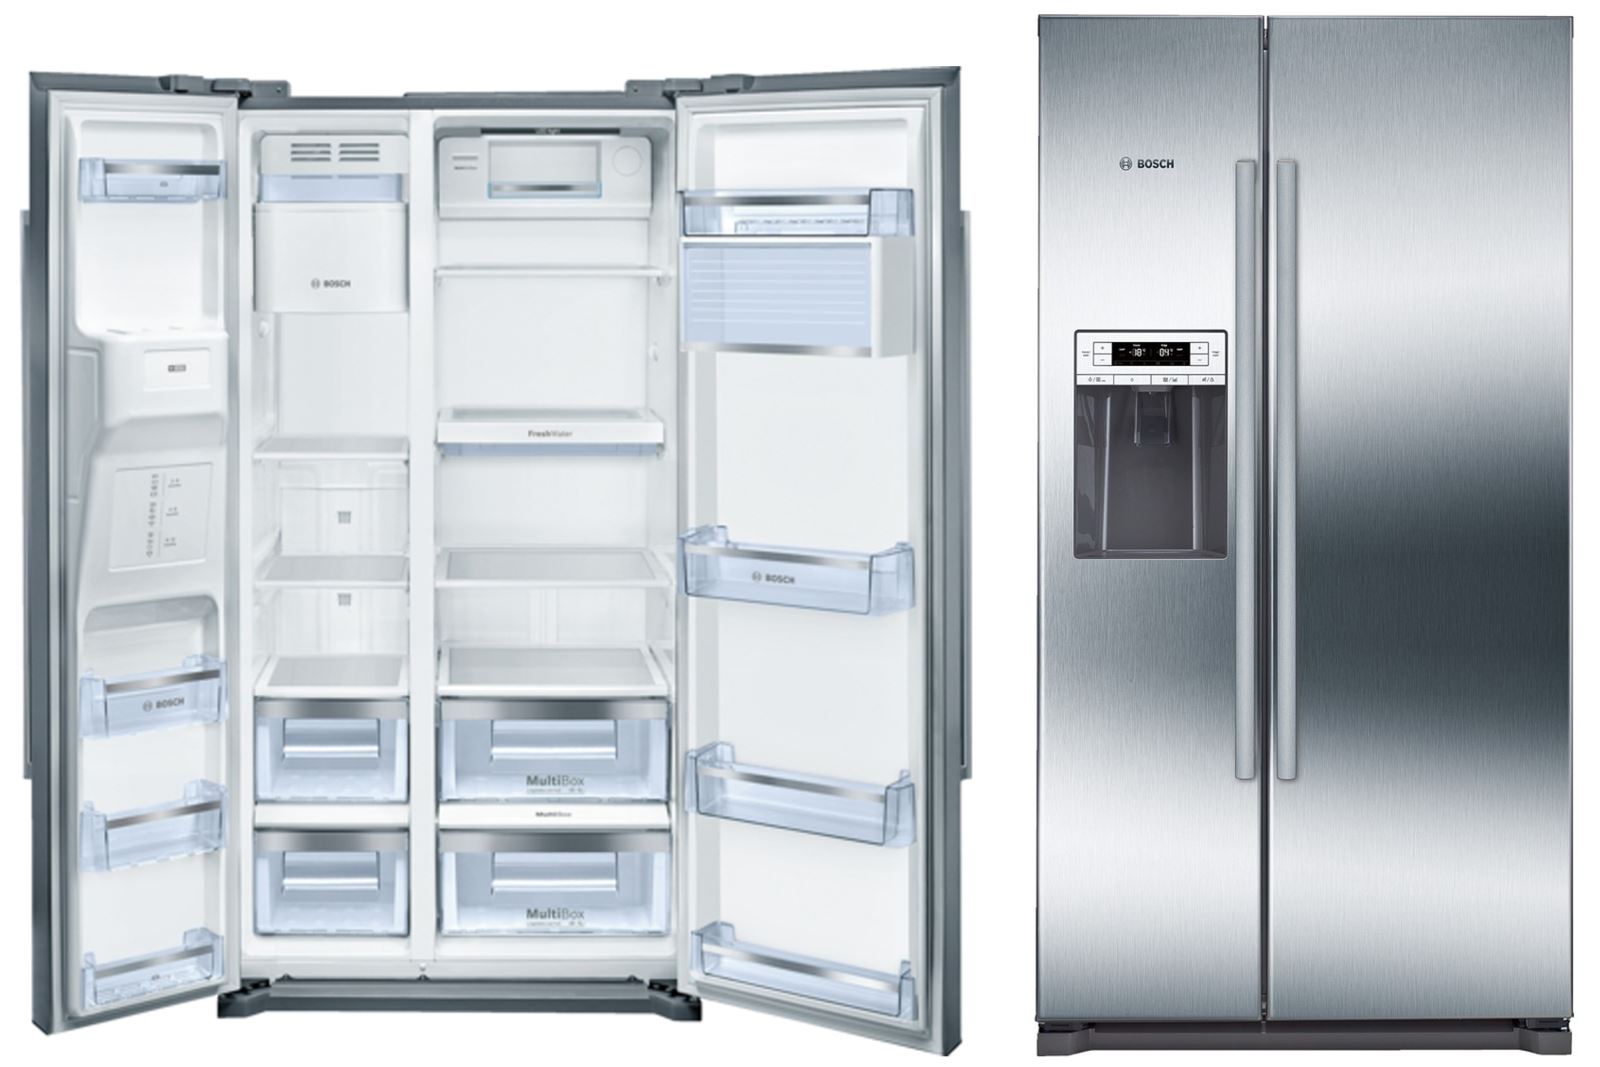 Tủ Lạnh Side By Side Bosch KAI90VI20G, tủ lạnh bosch kad90vb20, tủ lạnh bosch kag90ai20, tủ lạnh 2 cánh bosch, tủ lạnh bosch series 8, tủ lạnh side by side hitachi, tủ lạnh bosch kag90ai20g, tủ lạnh bosch kad92sb30